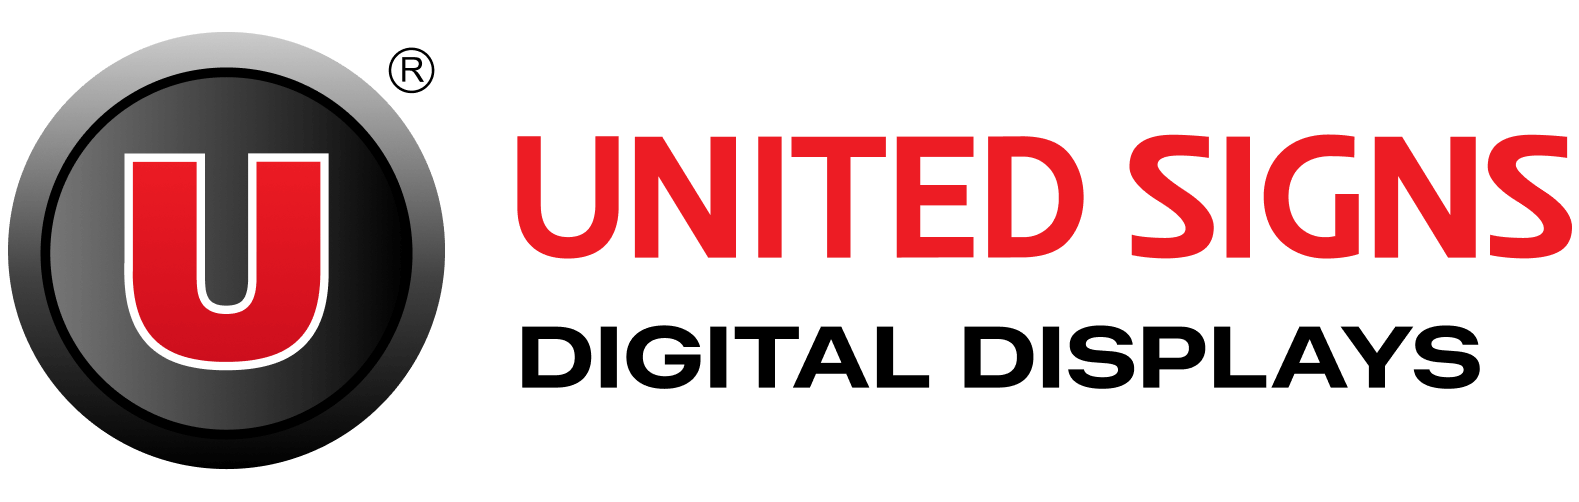 United Signs Digital Displays